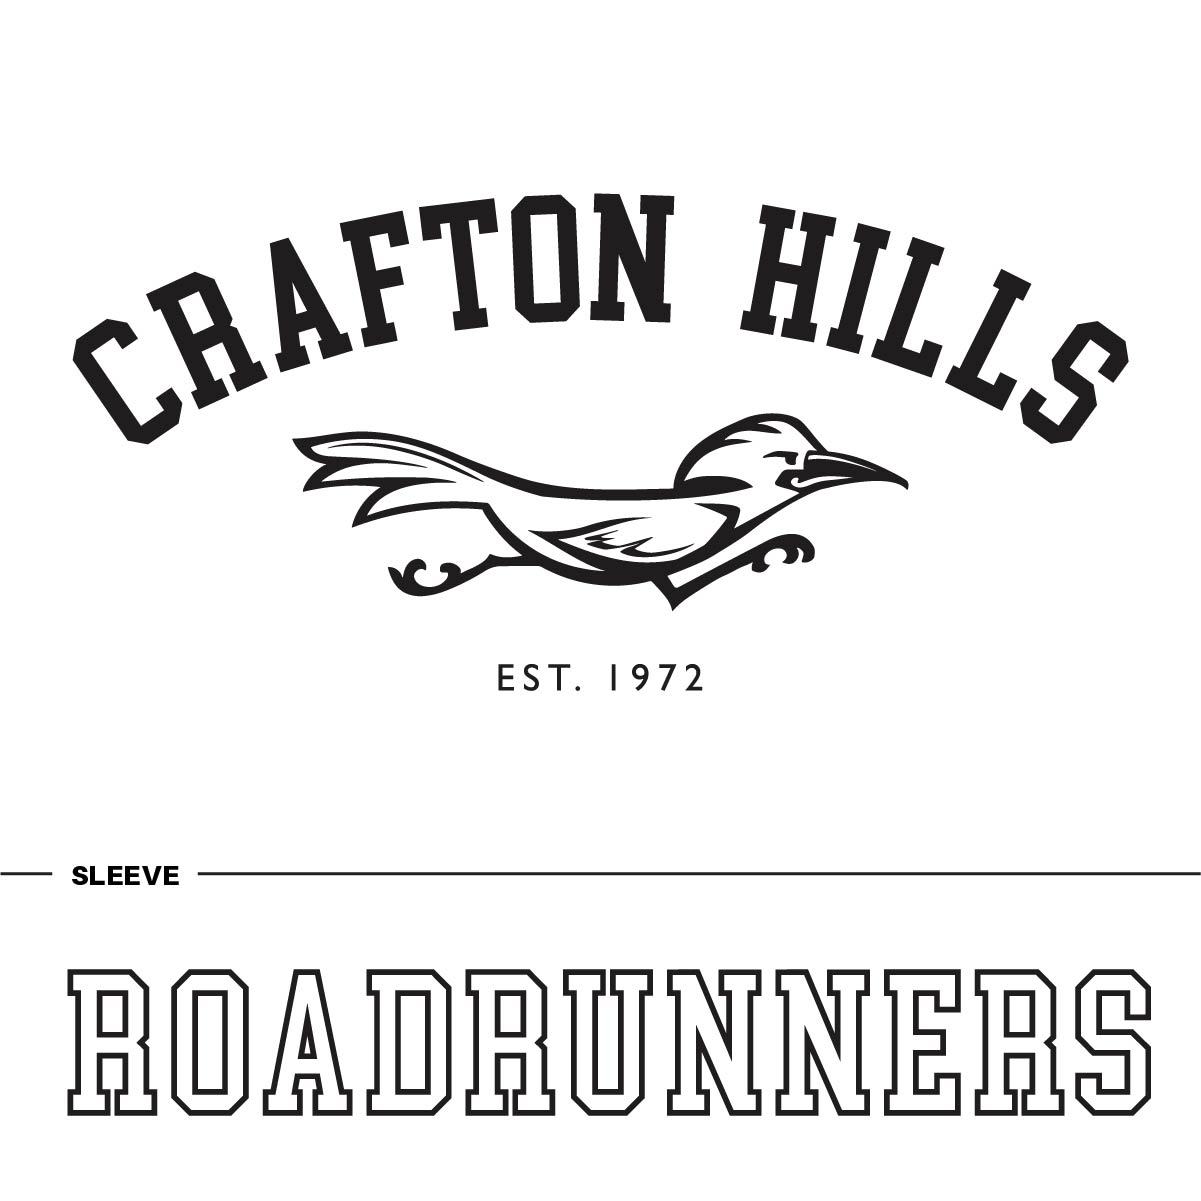 Crafton Hills Roadrunner Long